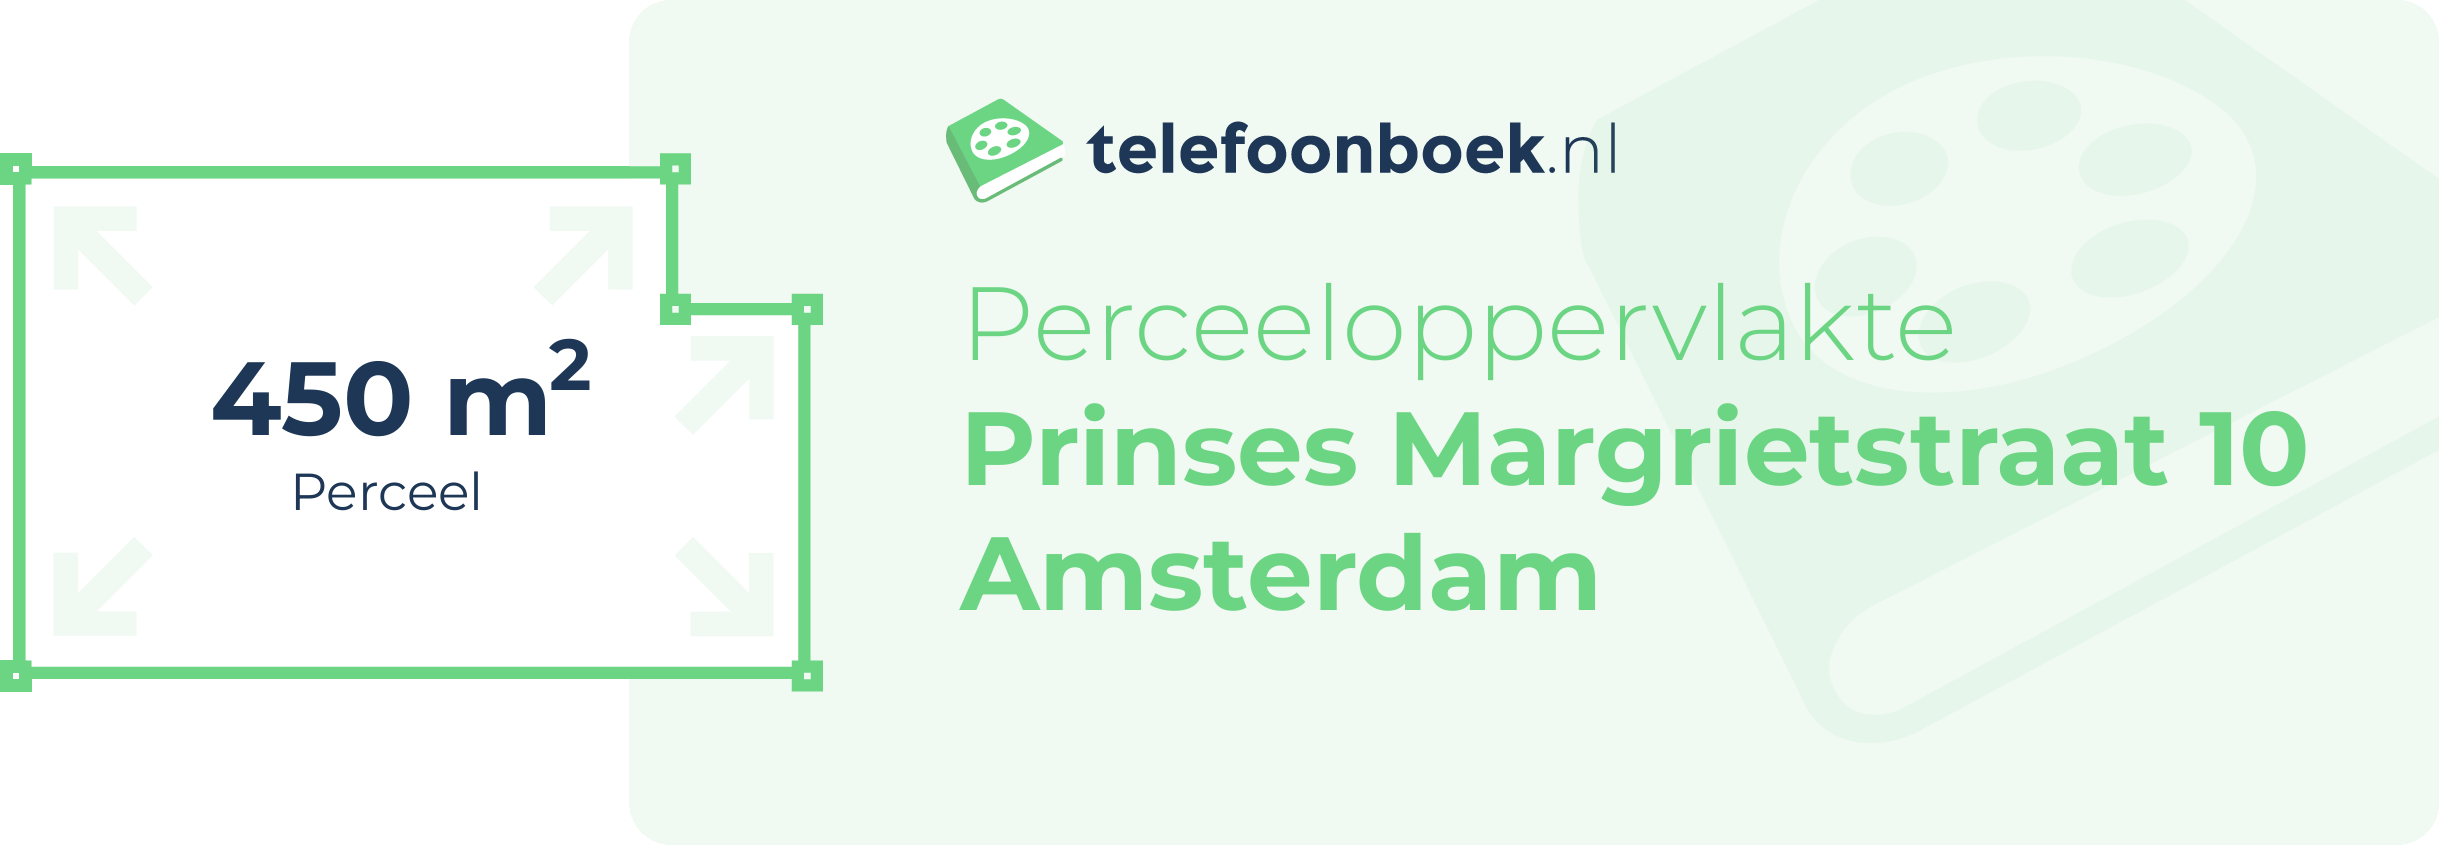 Perceeloppervlakte Prinses Margrietstraat 10 Amsterdam